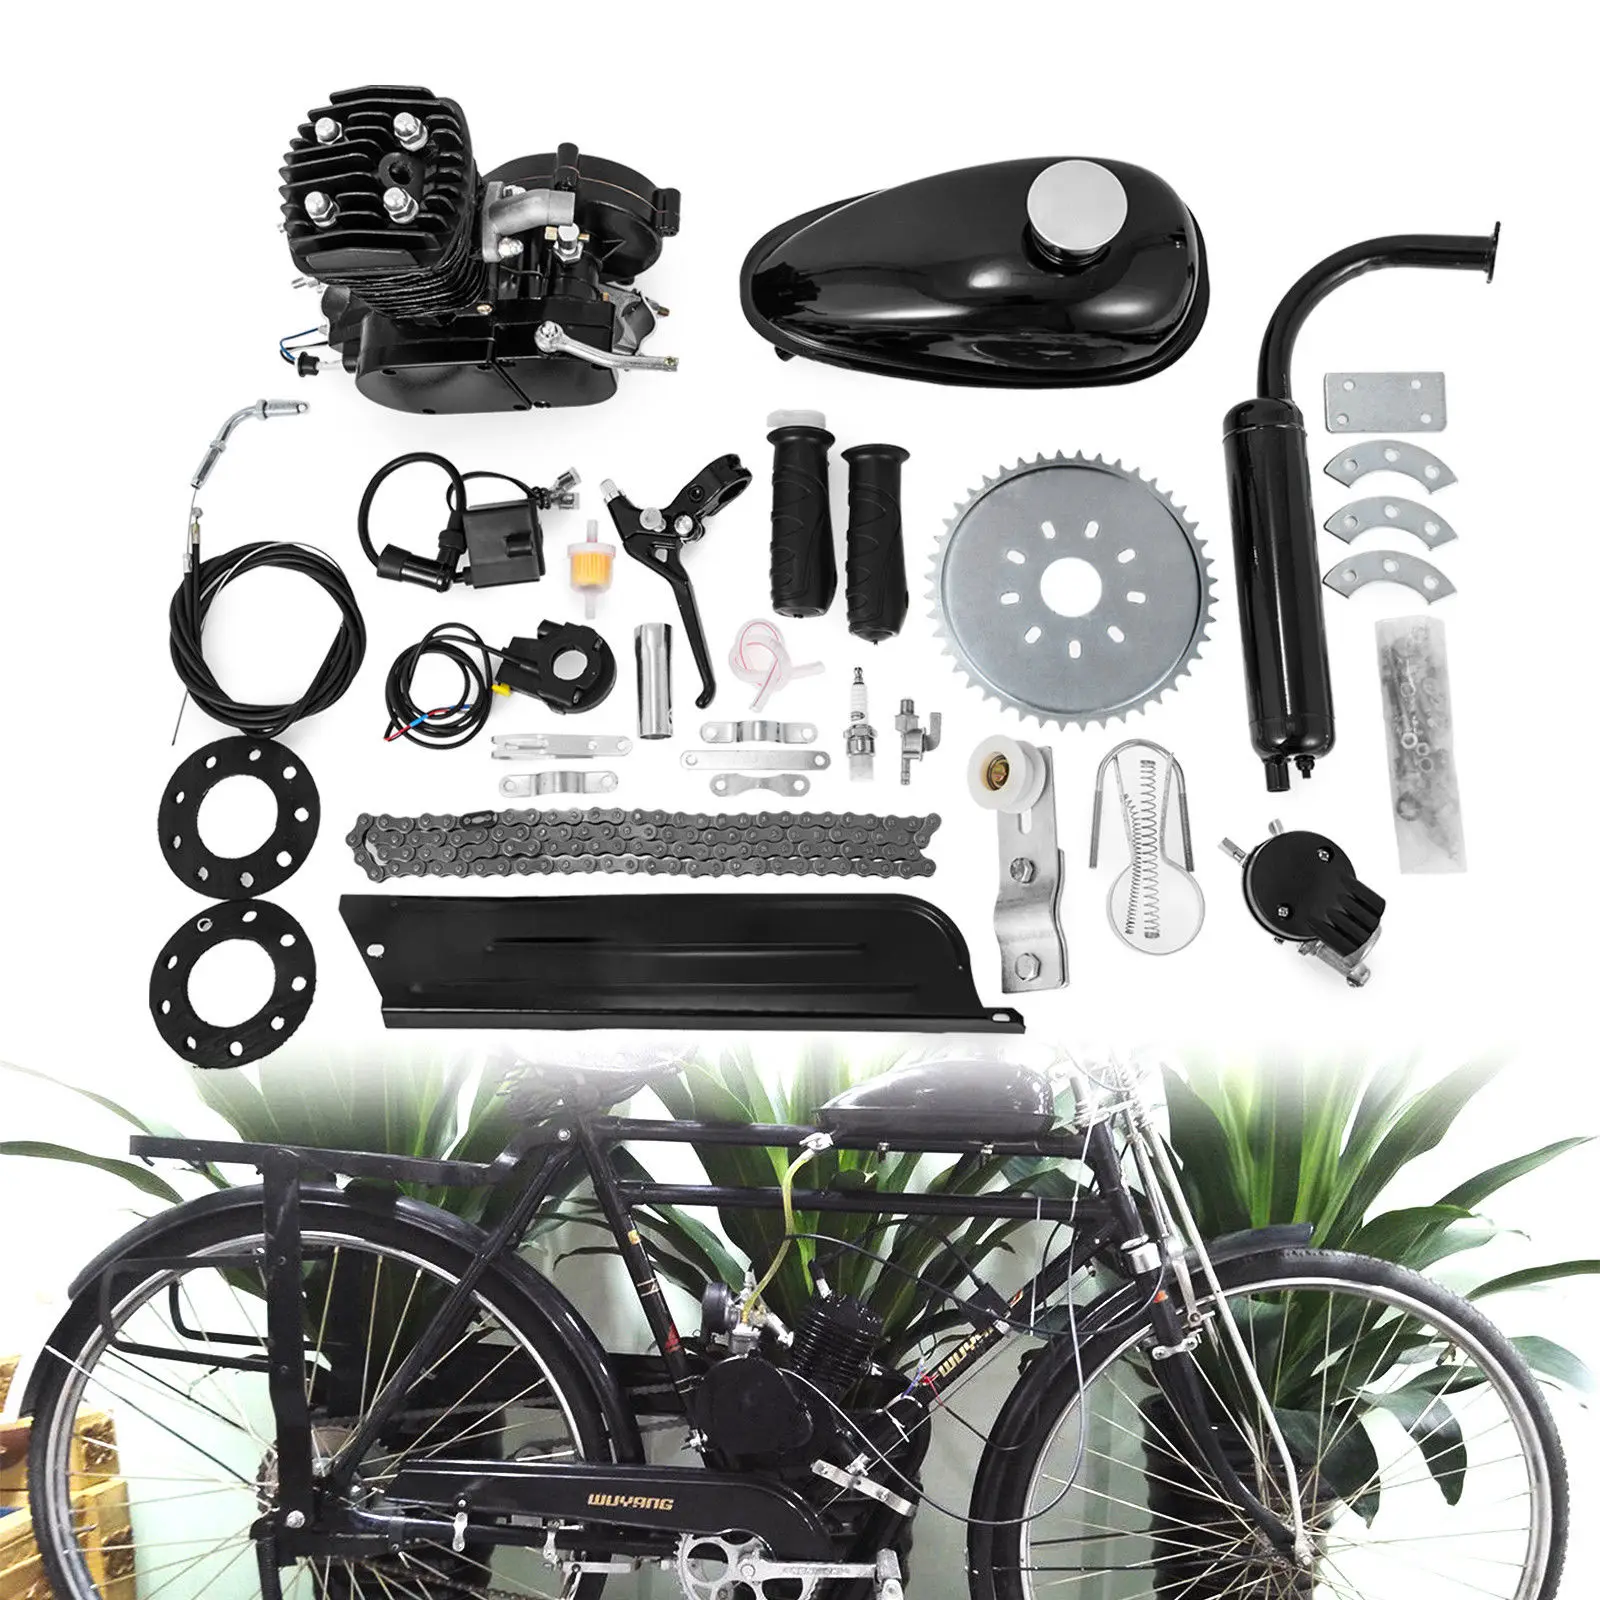 

Professional 80CC Motorized Push Bike Motorised Bicycle Petrol Gas Motor Engine kit 2 Stroke with Cheap Price